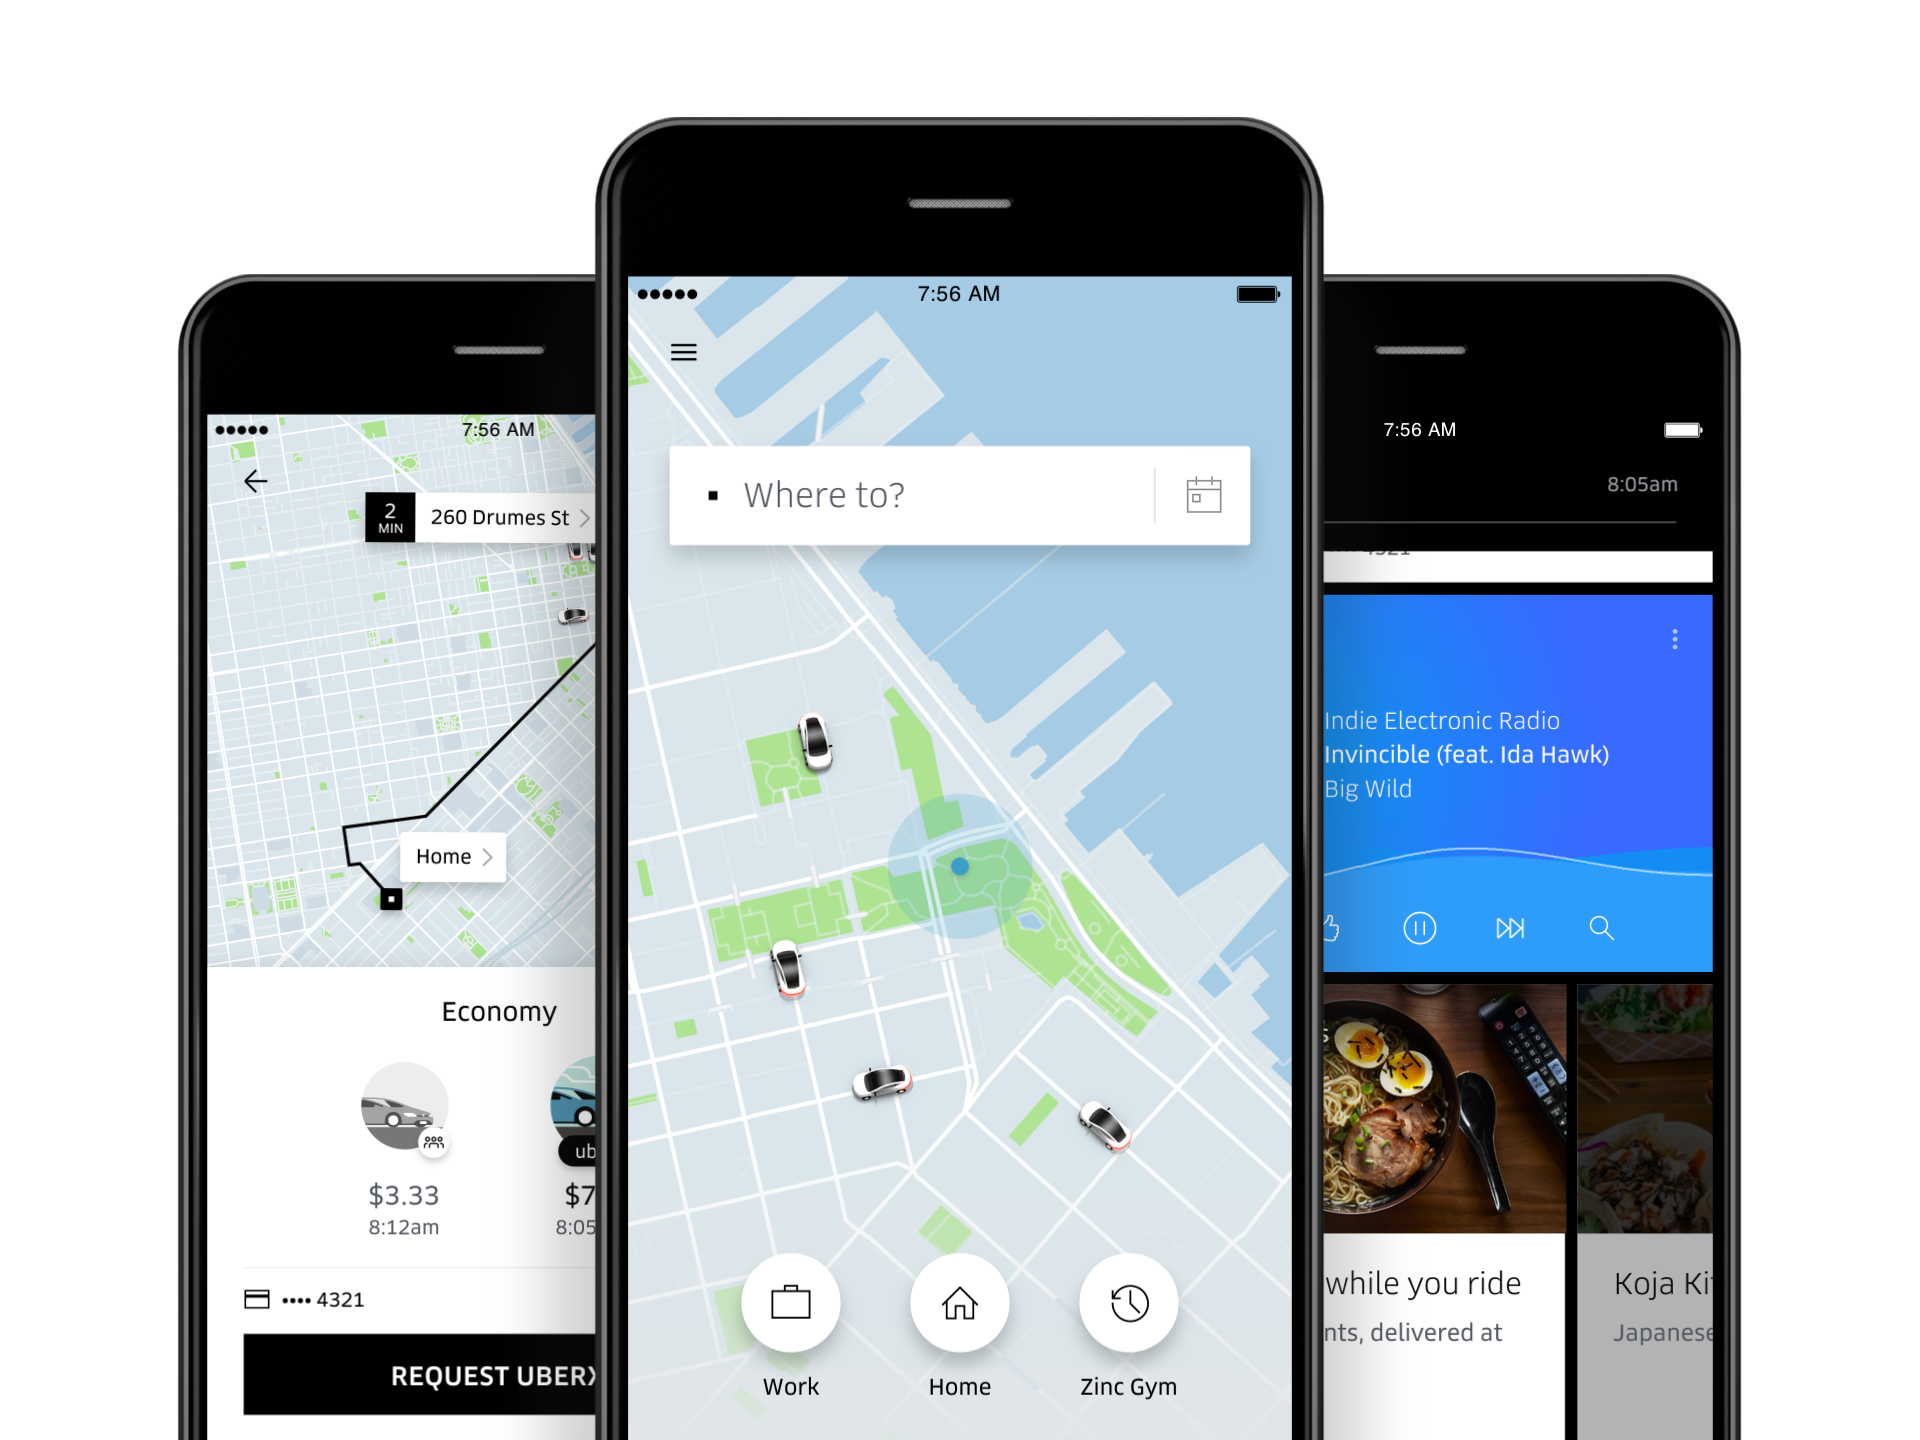 phones with the Uber app open